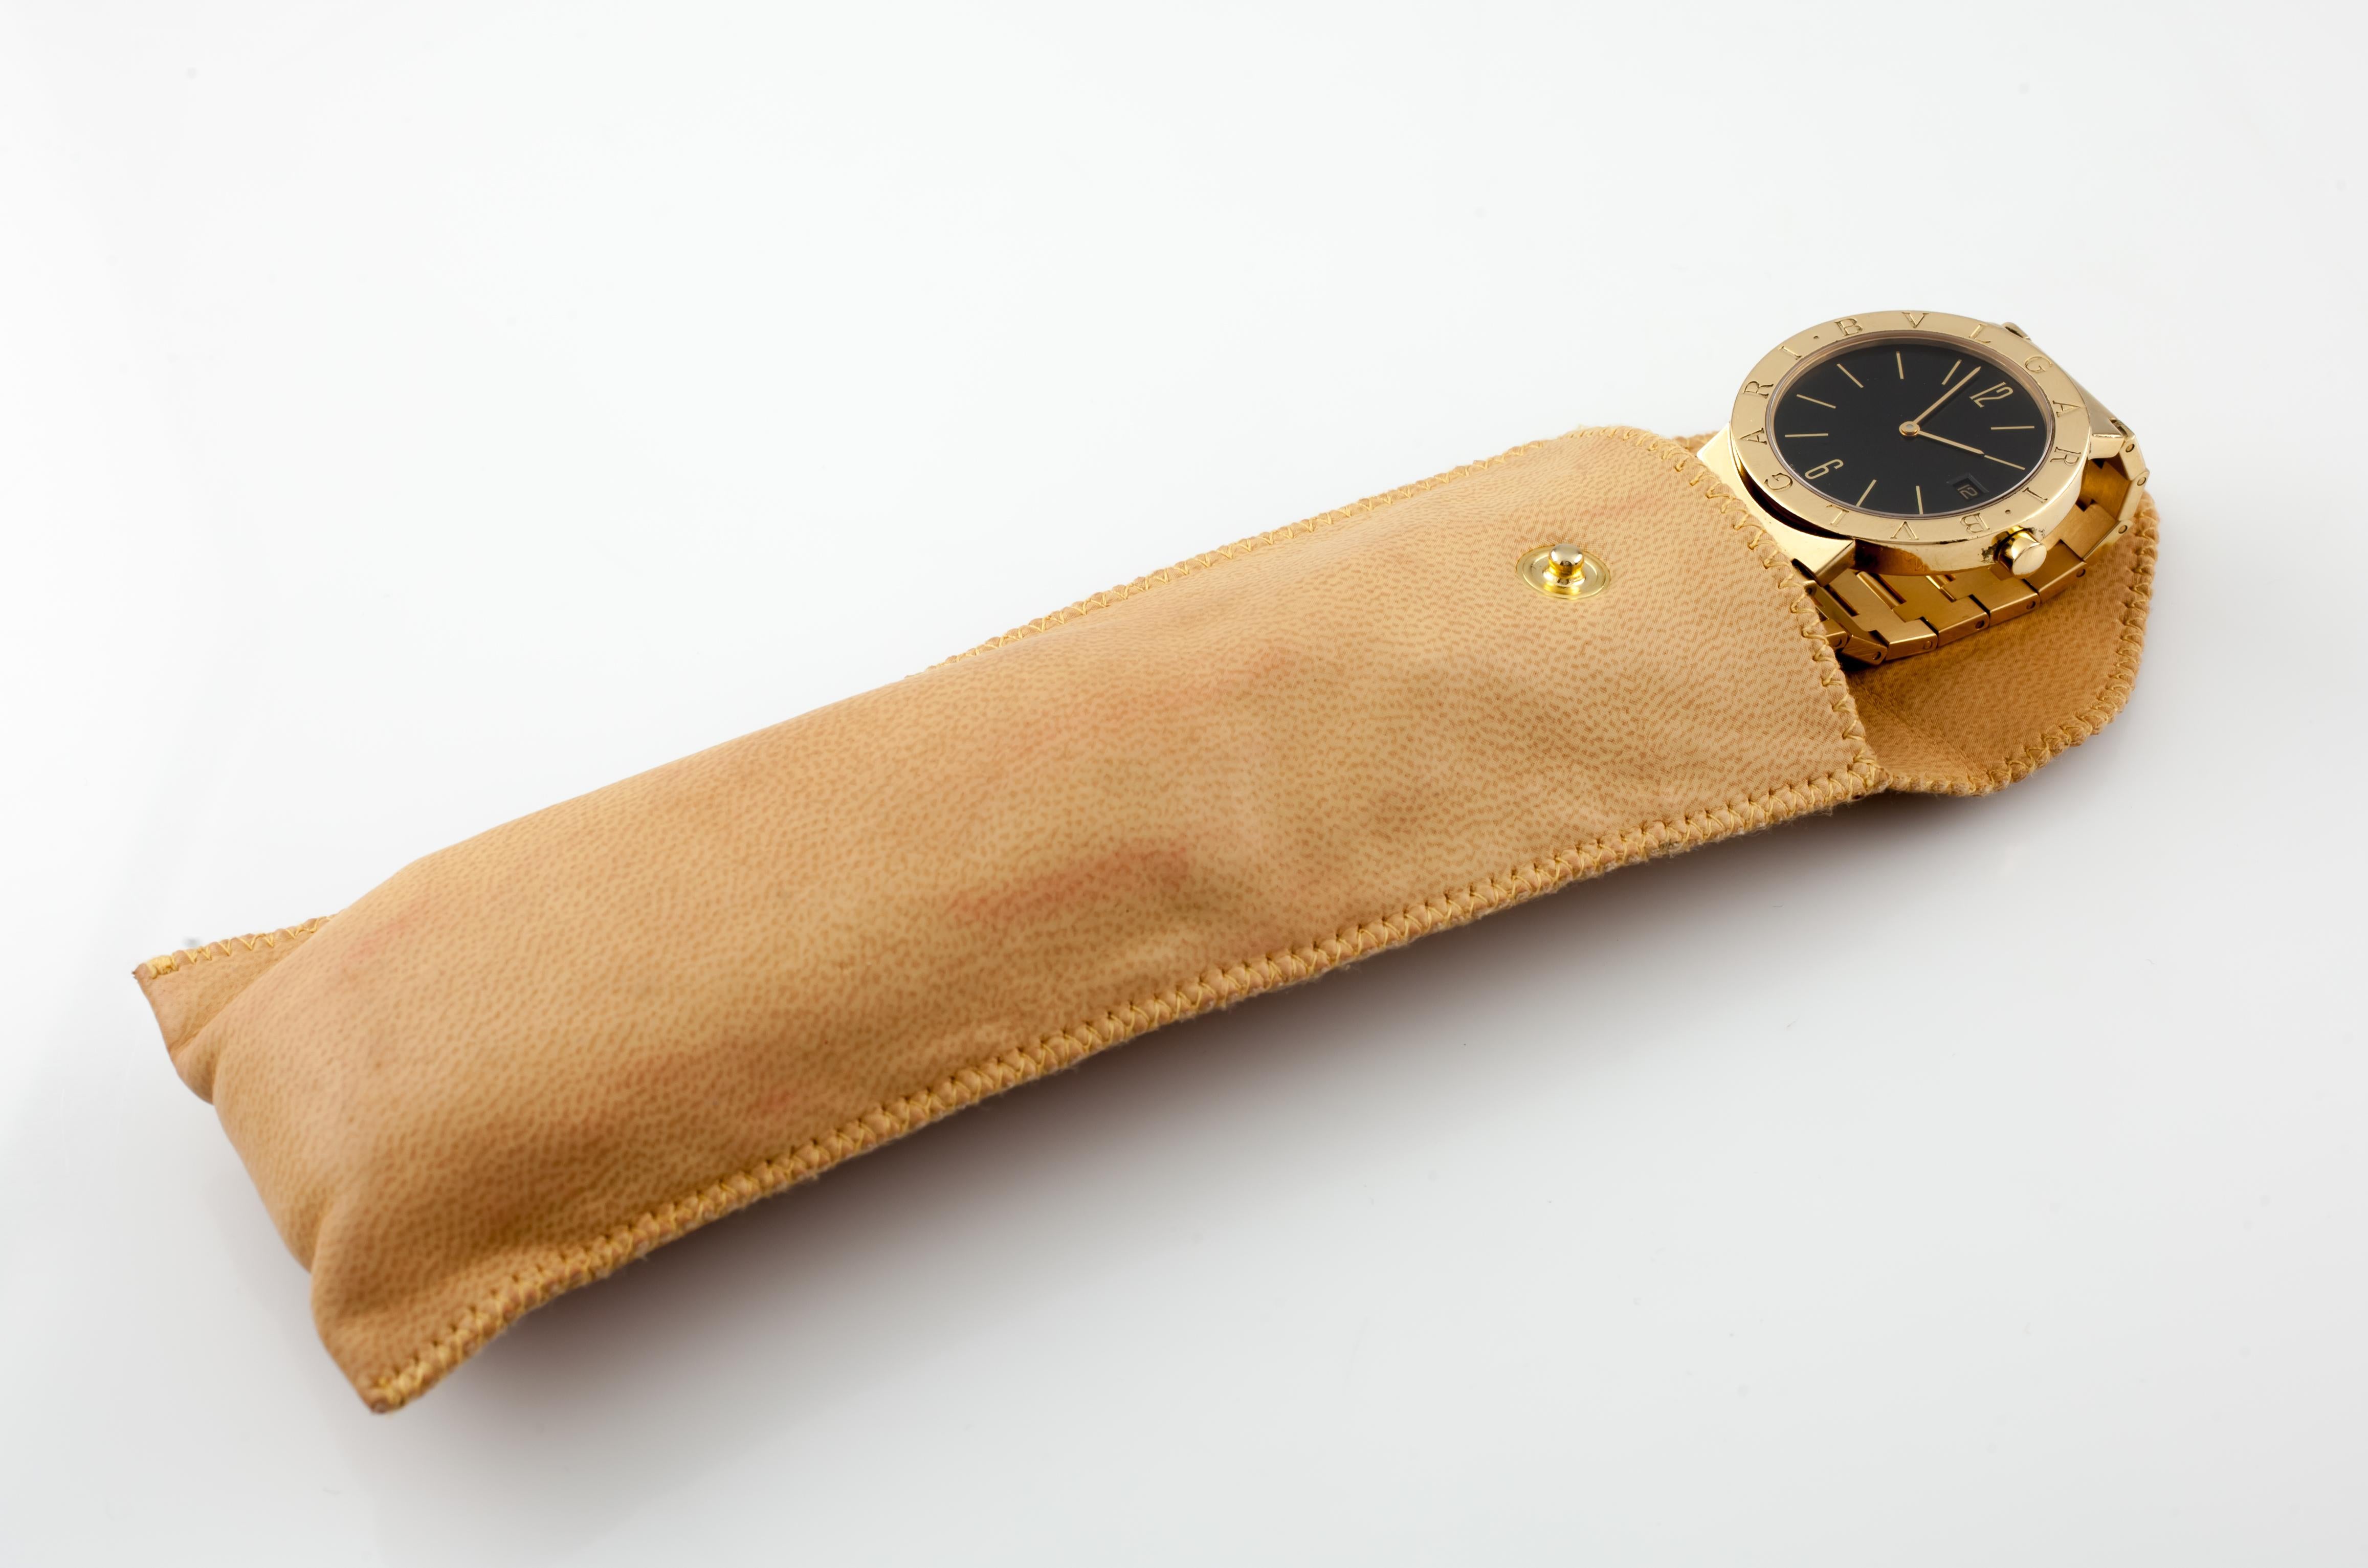 Bulgari Bvlgari 18 Karat Yellow Gold Quartz Watch with Leather Pouch BB 33 GGD 1